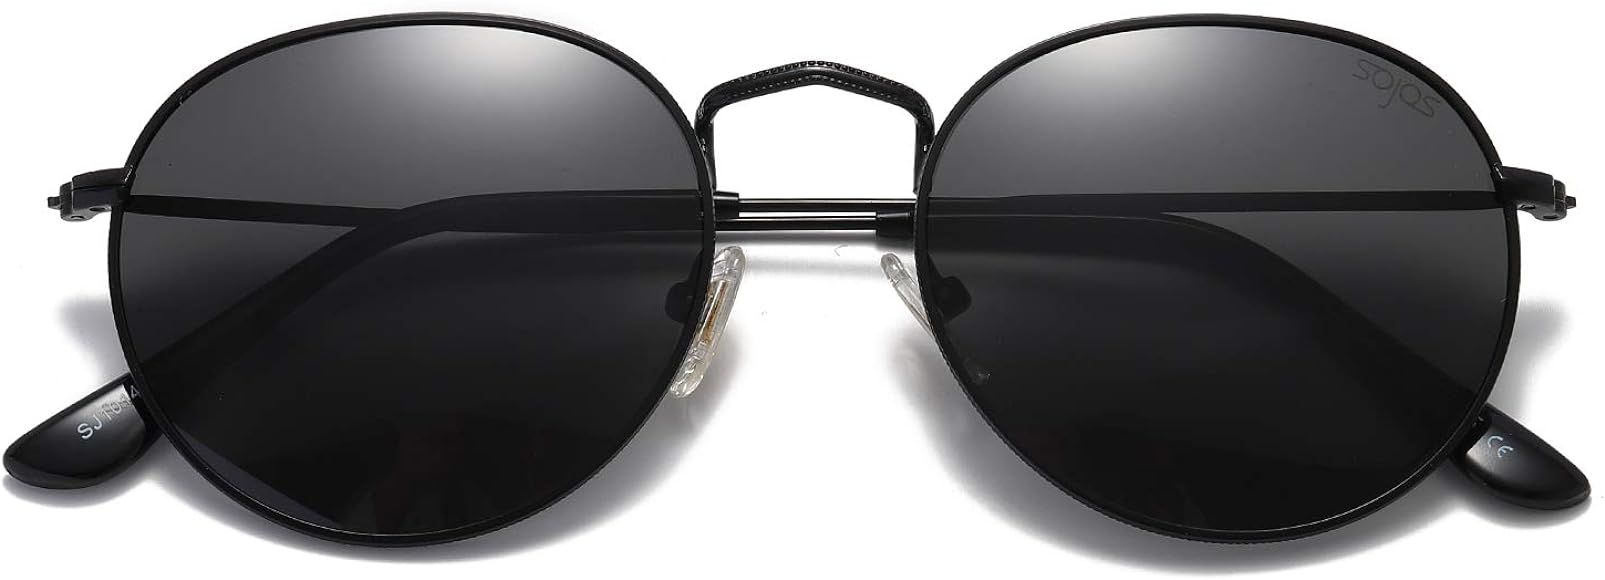 SOJOS Polarized Sunglasses Classic Small Round Metal Frame for Women Men SJ1014 | Amazon (US)